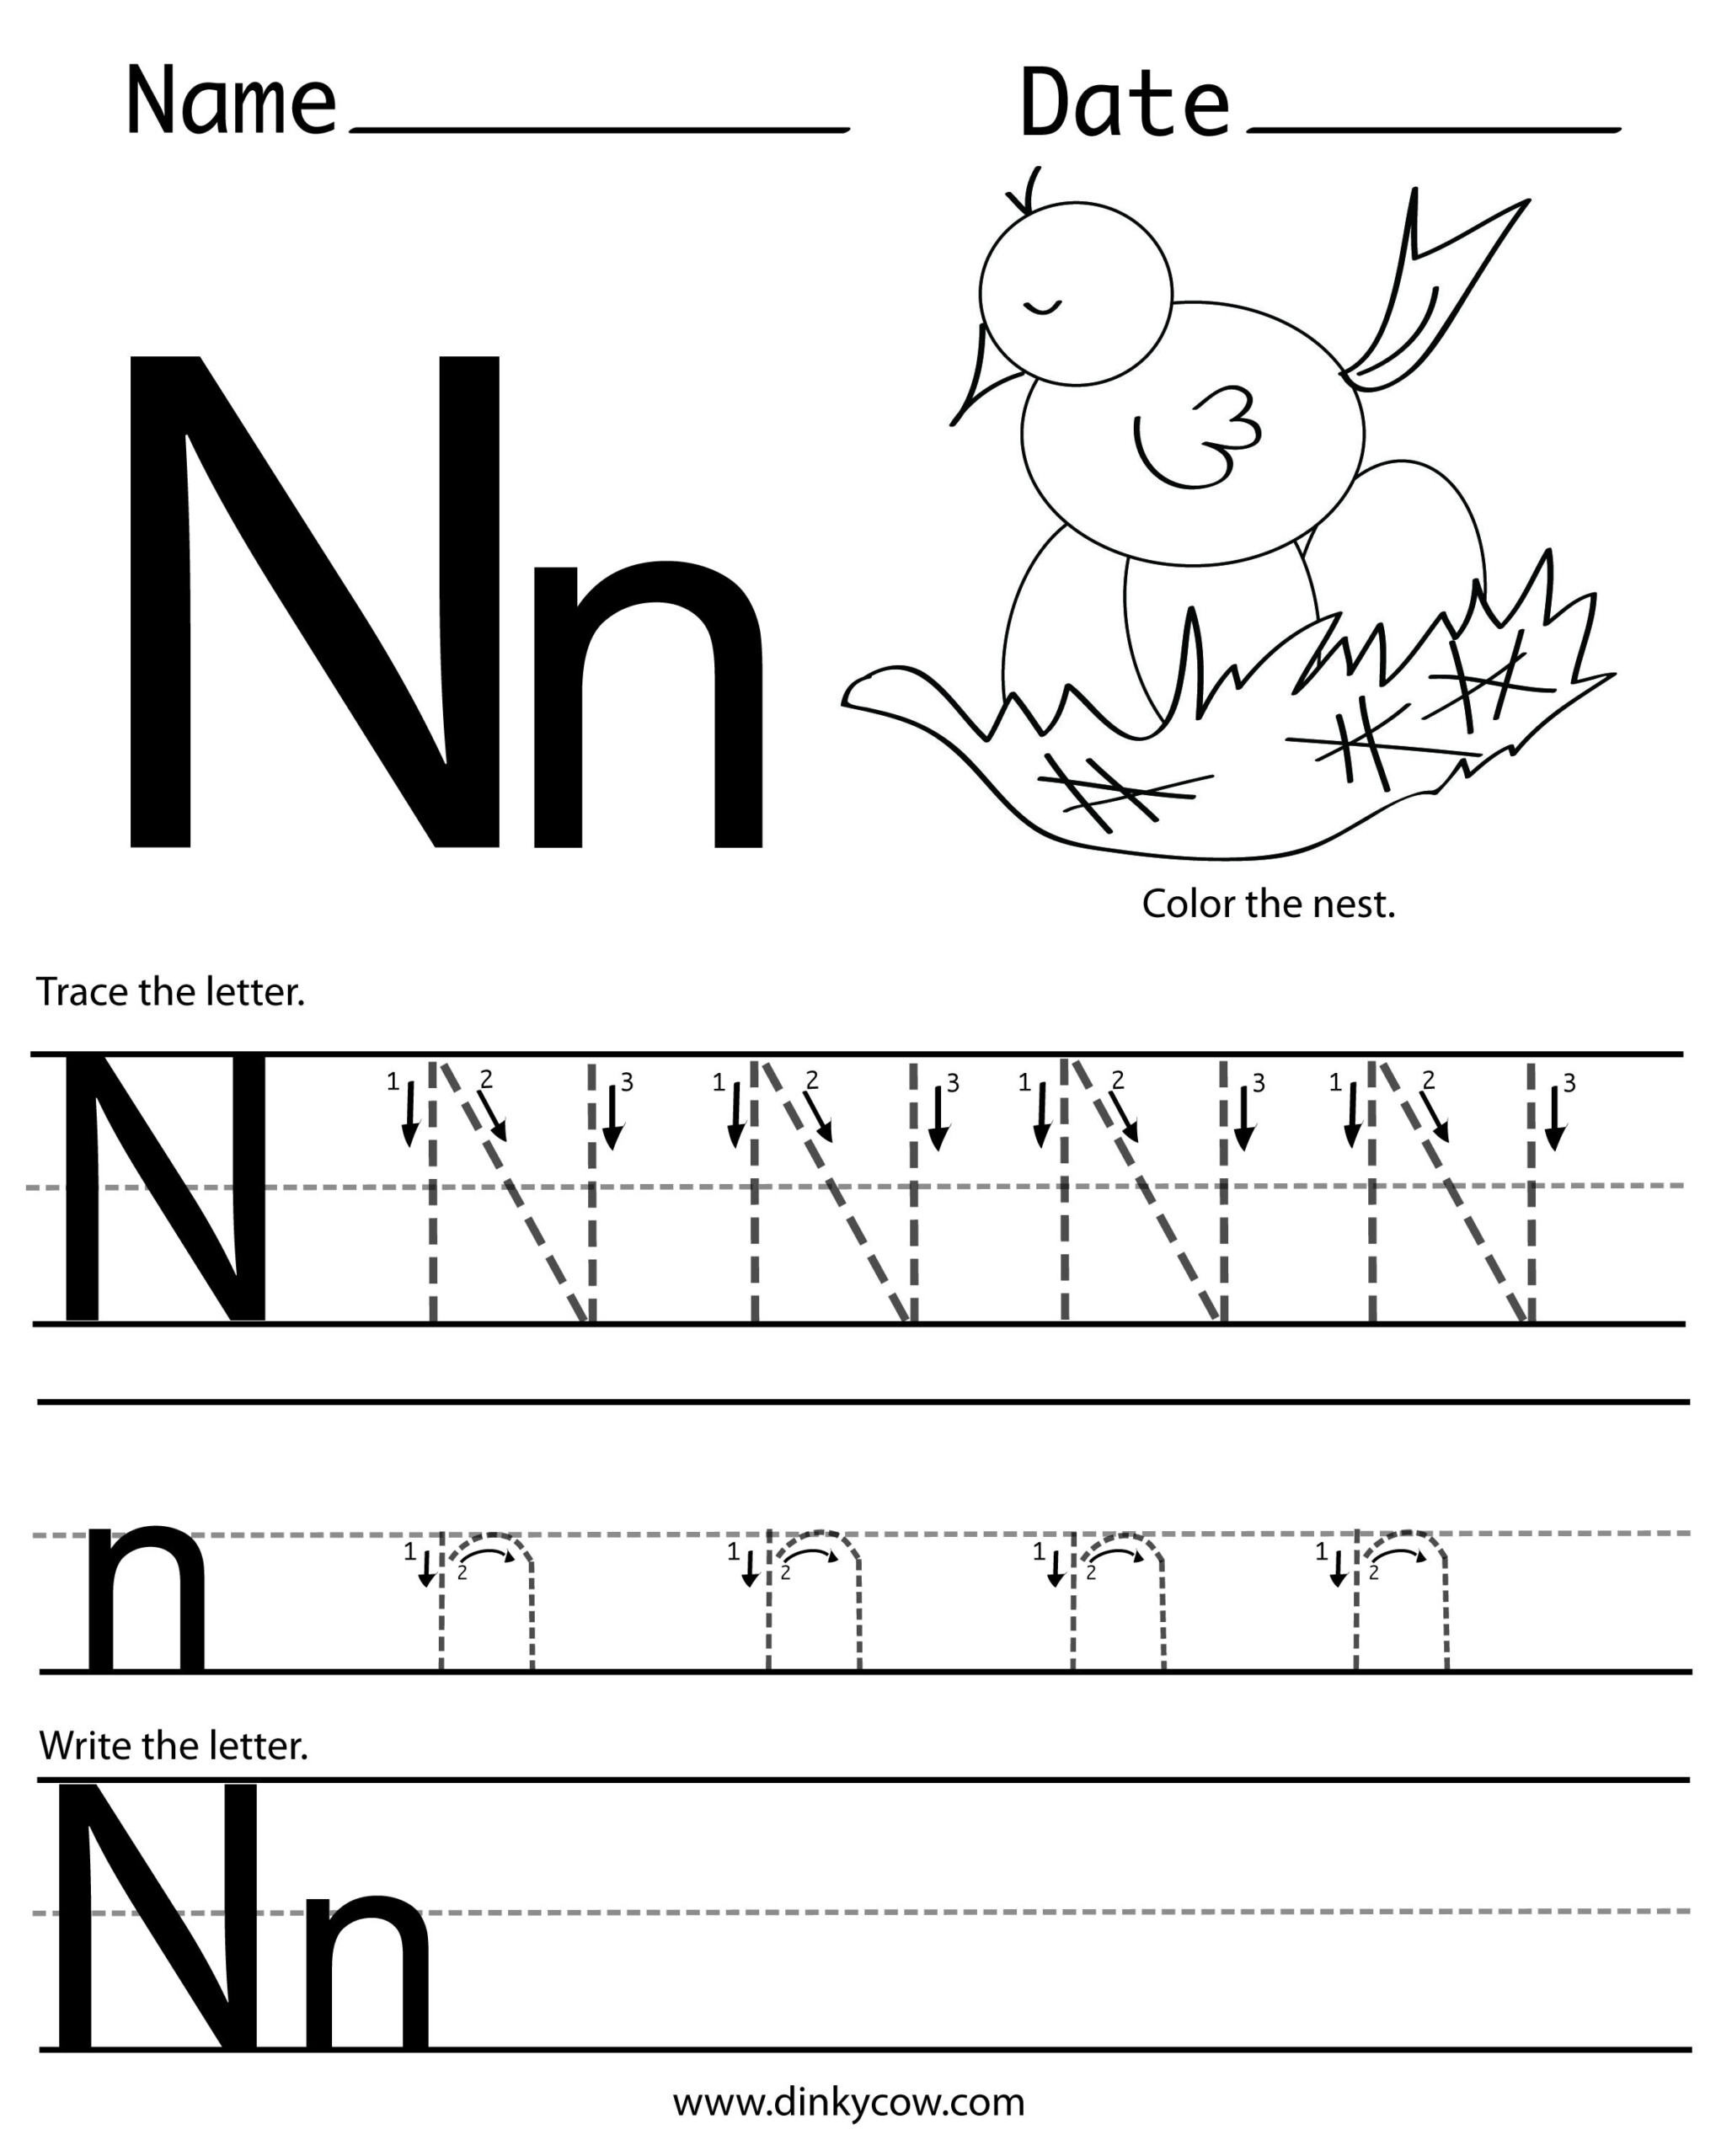 Pinchristy Bush On Primary | Free Handwriting Worksheets inside Tracing Letter N Worksheets